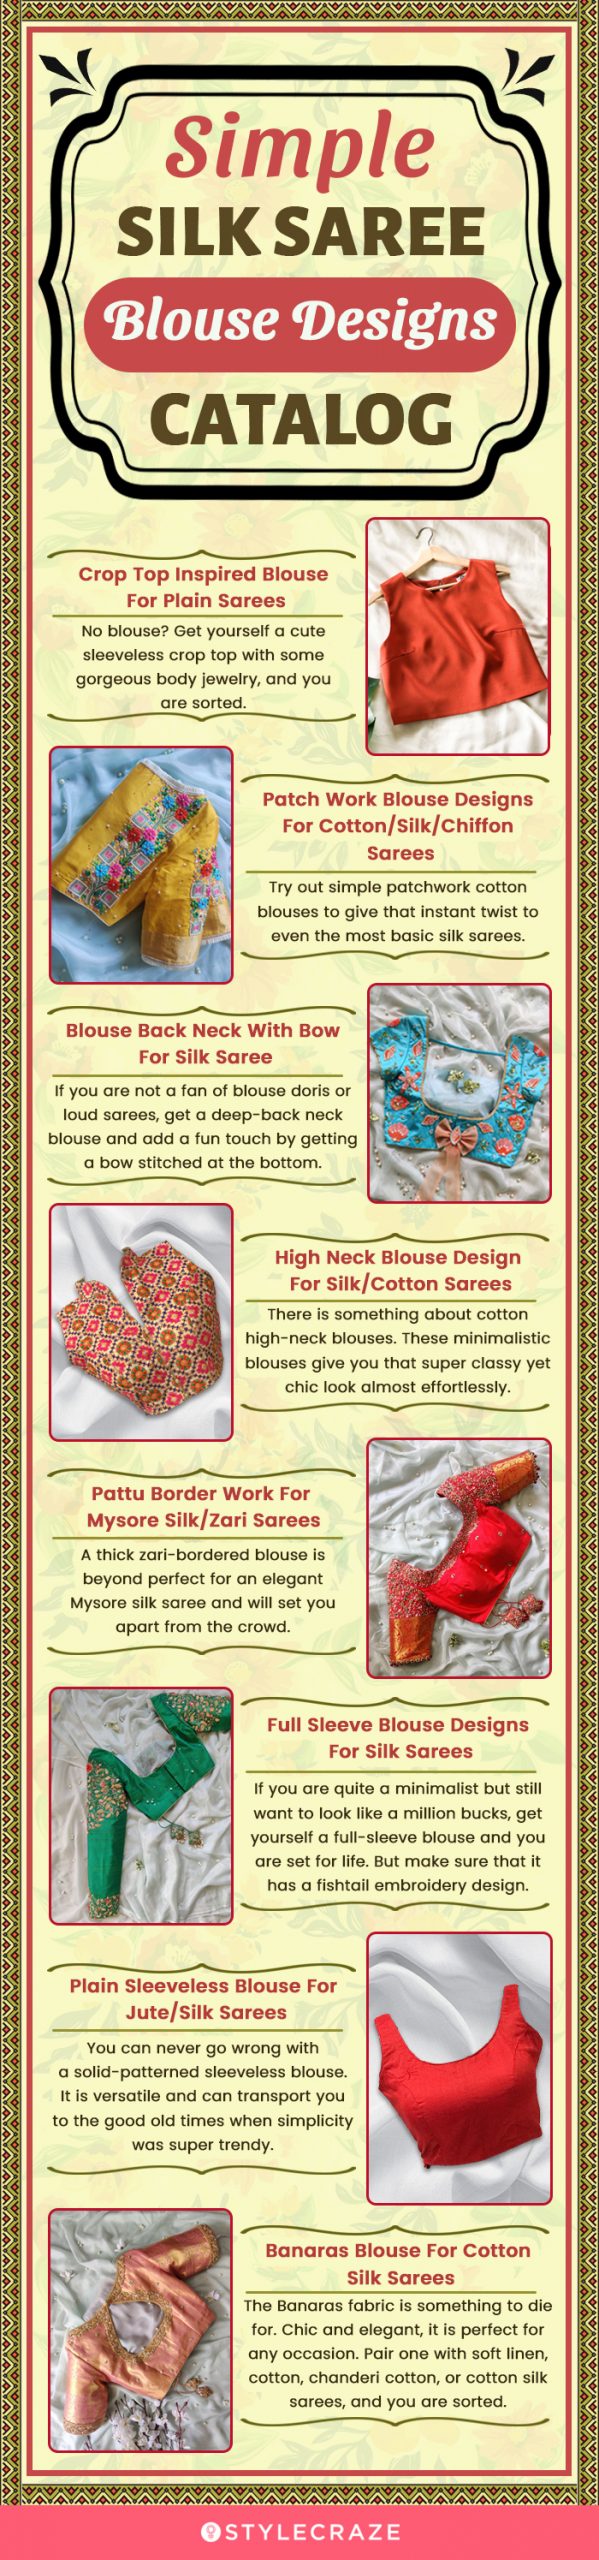 simple silk saree blouse designs catalog (infographic)